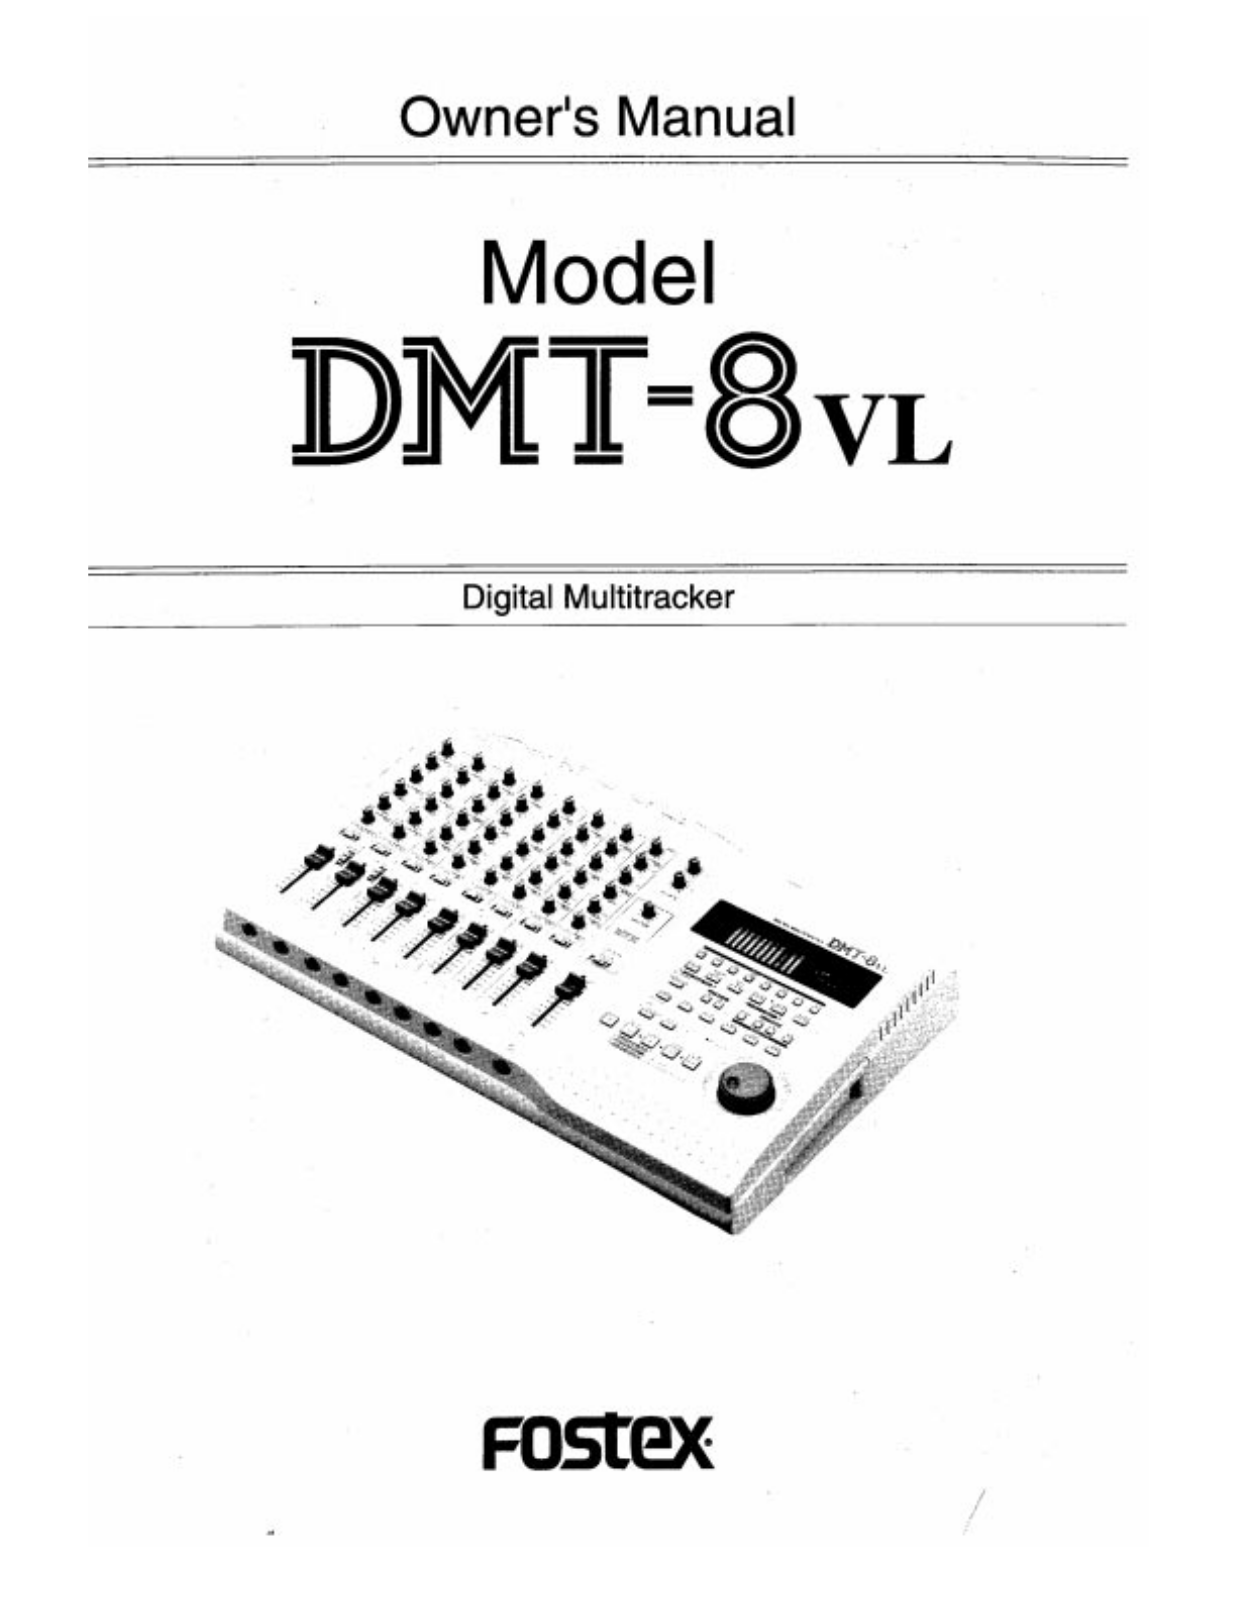 Fostex DMT-8VL User Manual